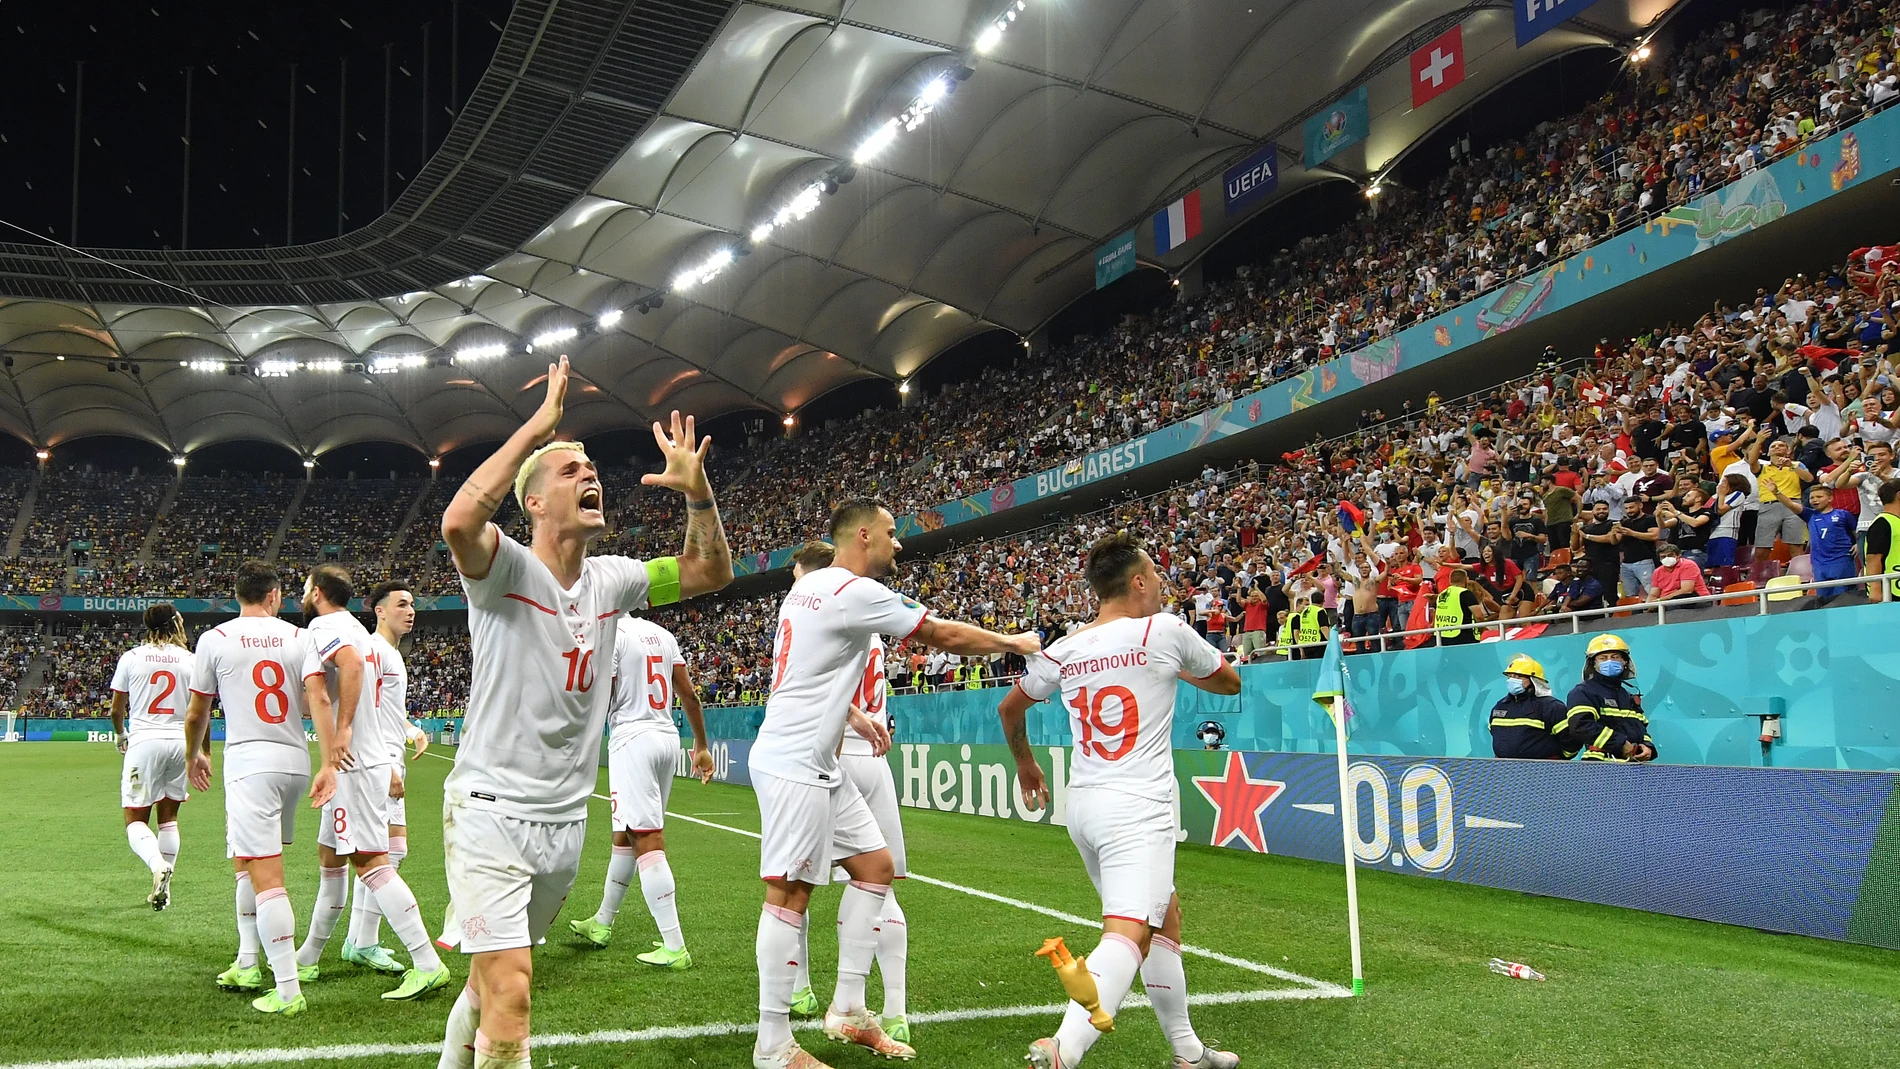 Suiza celebra un gol en la Eurocopa